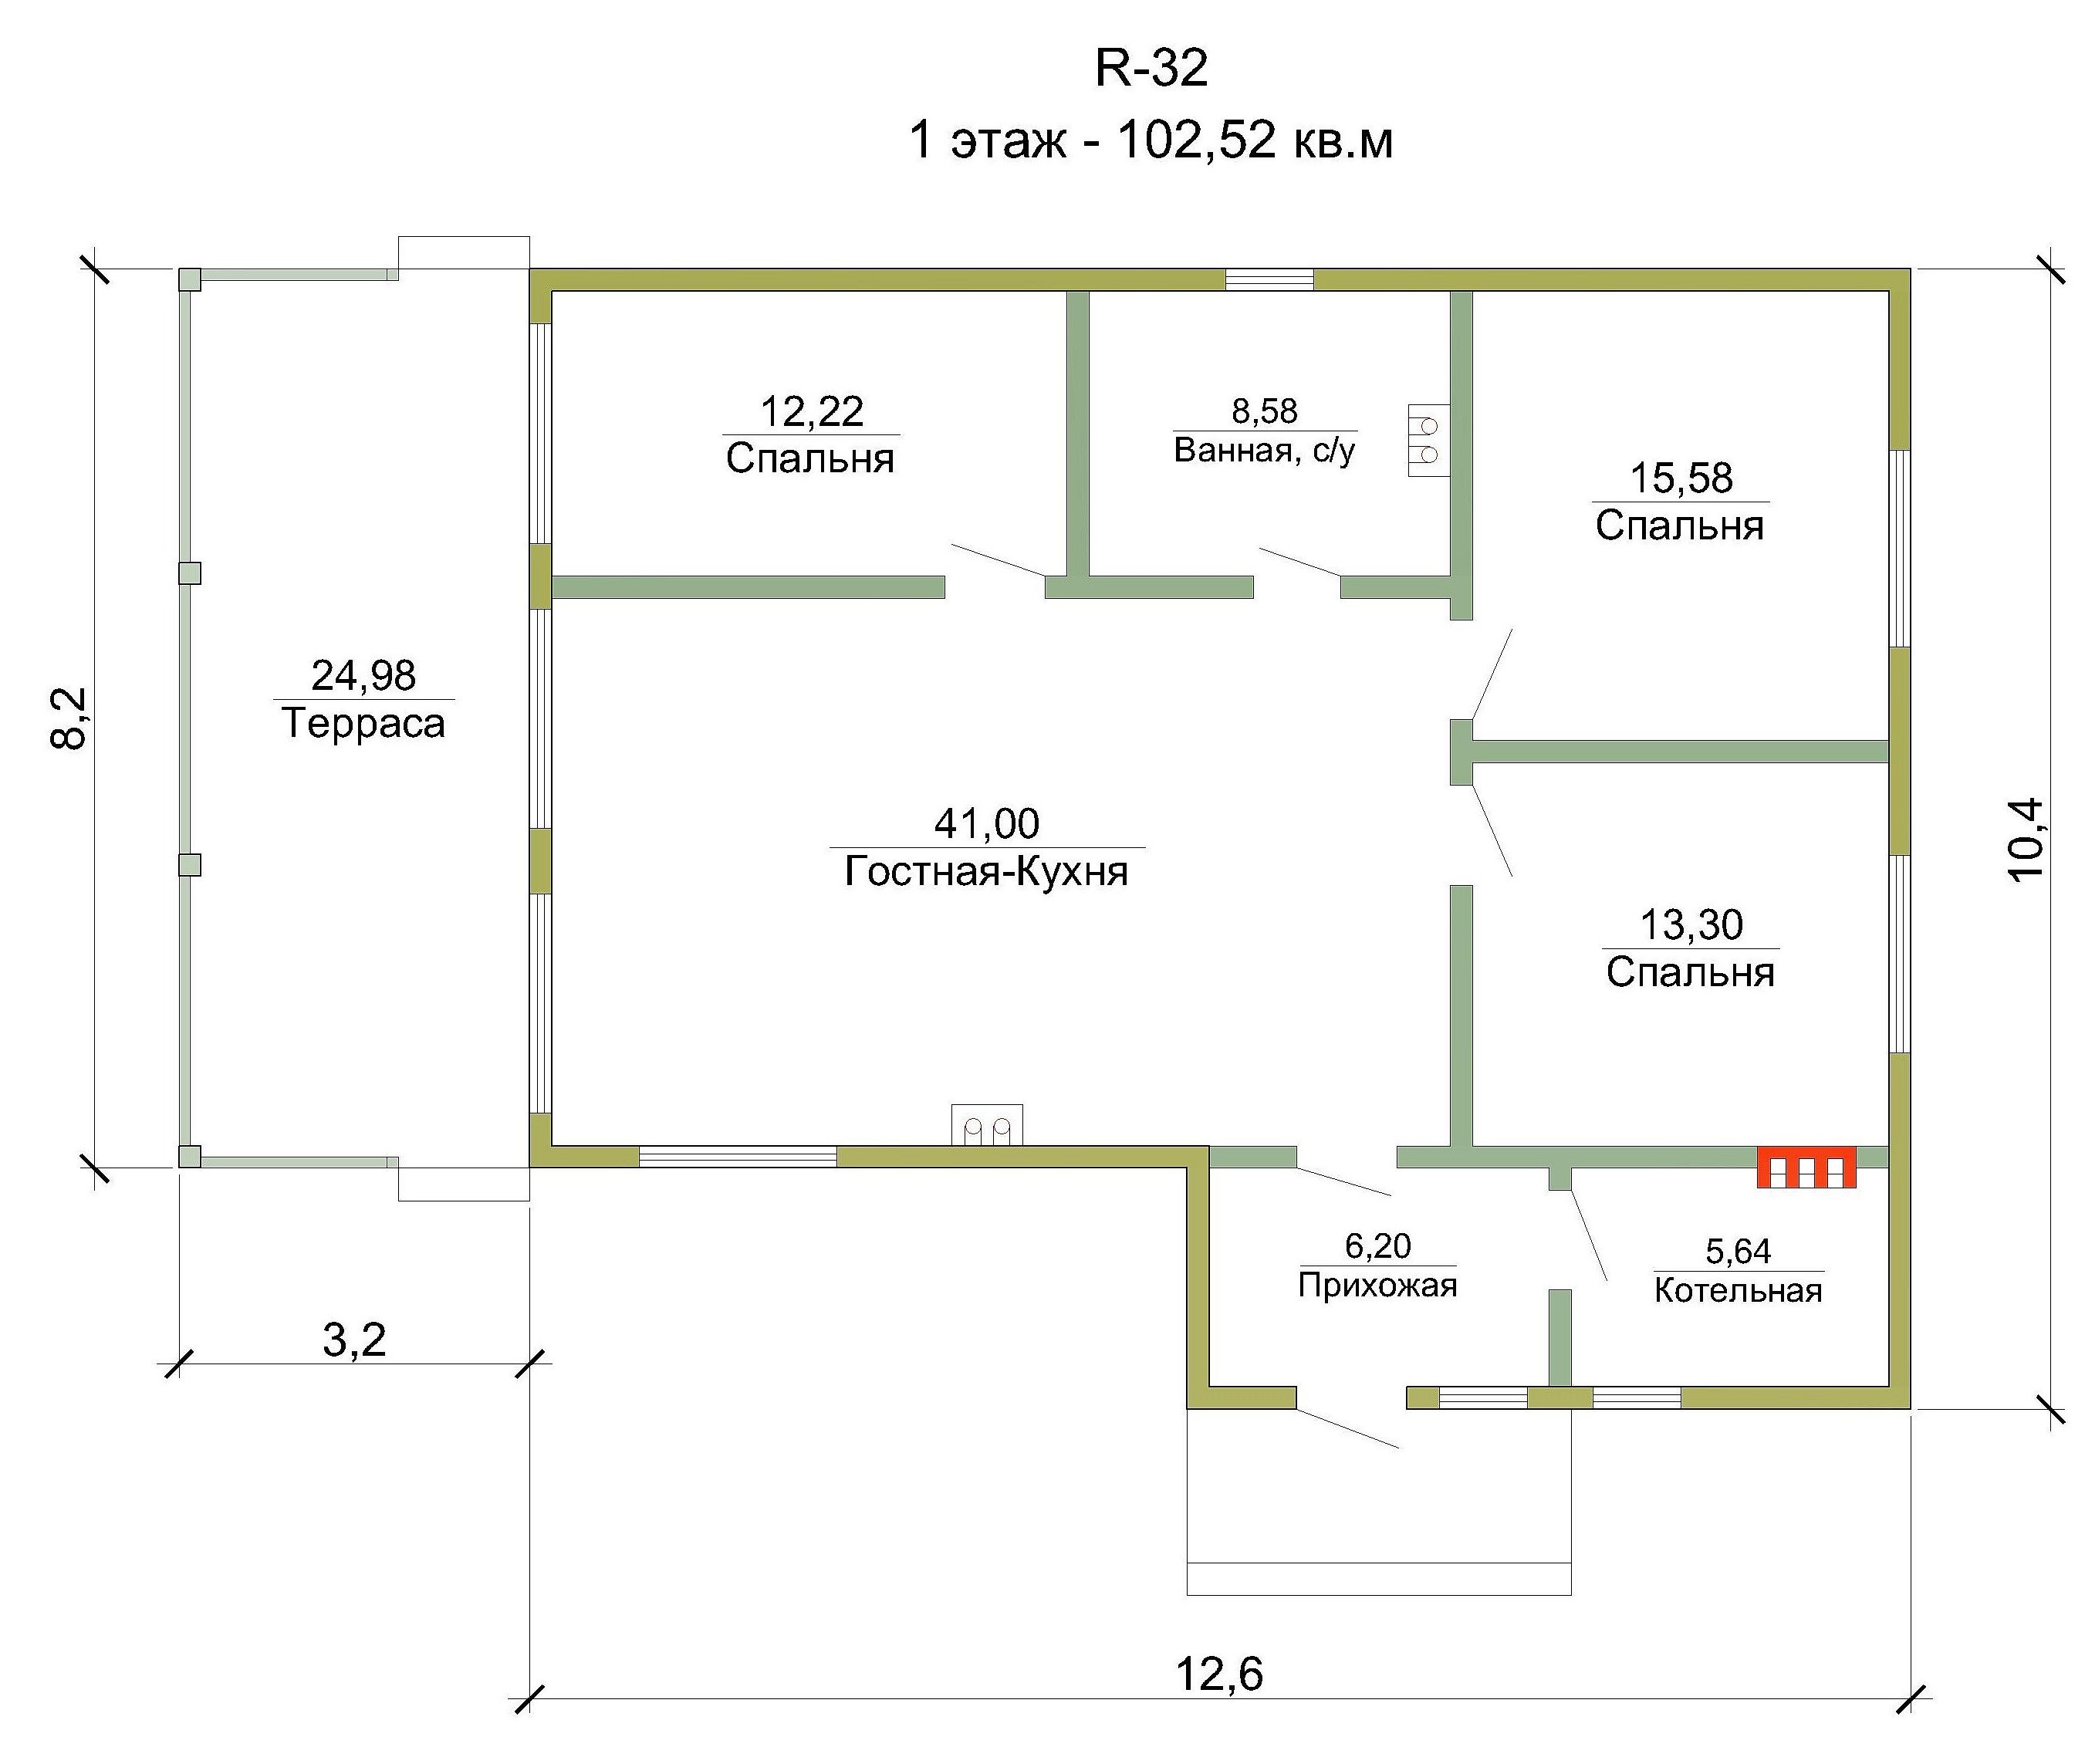 Готовый проект дома 102 кв.м / Артикул R-32 план